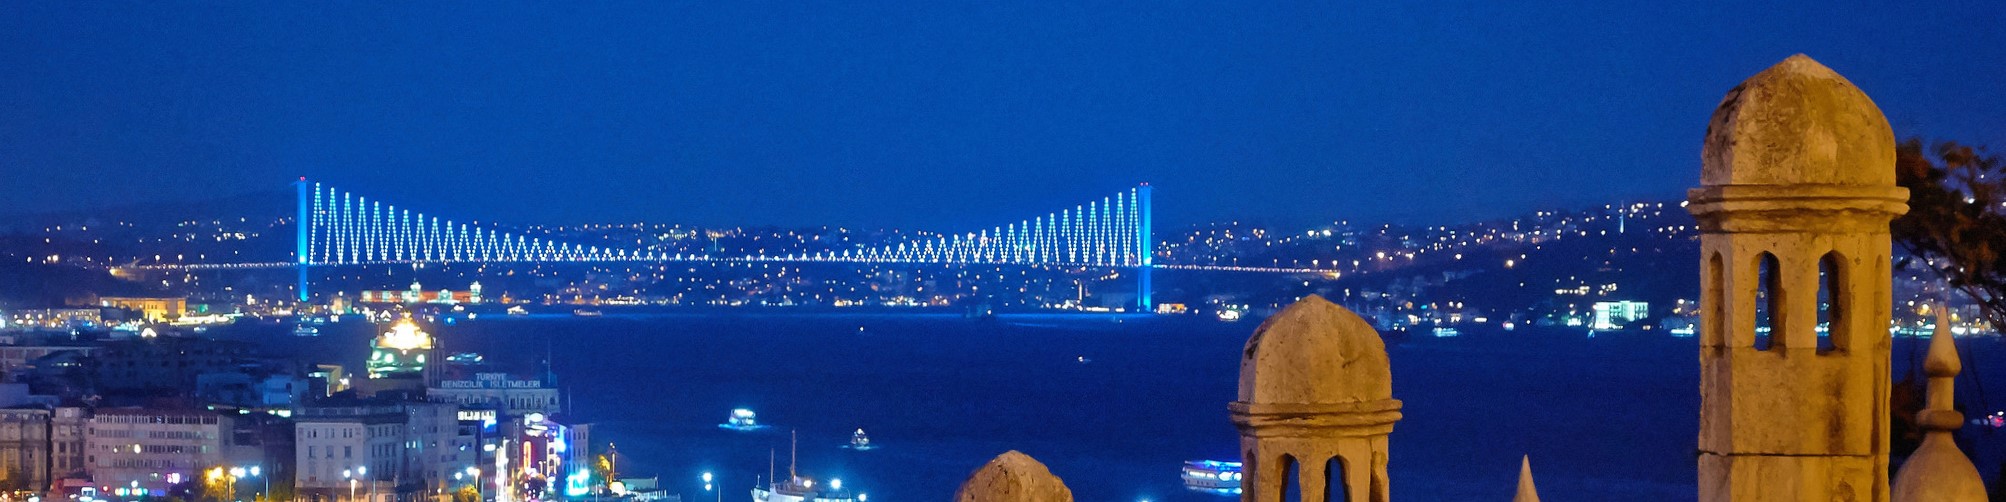 15 July Martyrs Bridge, Istanbul